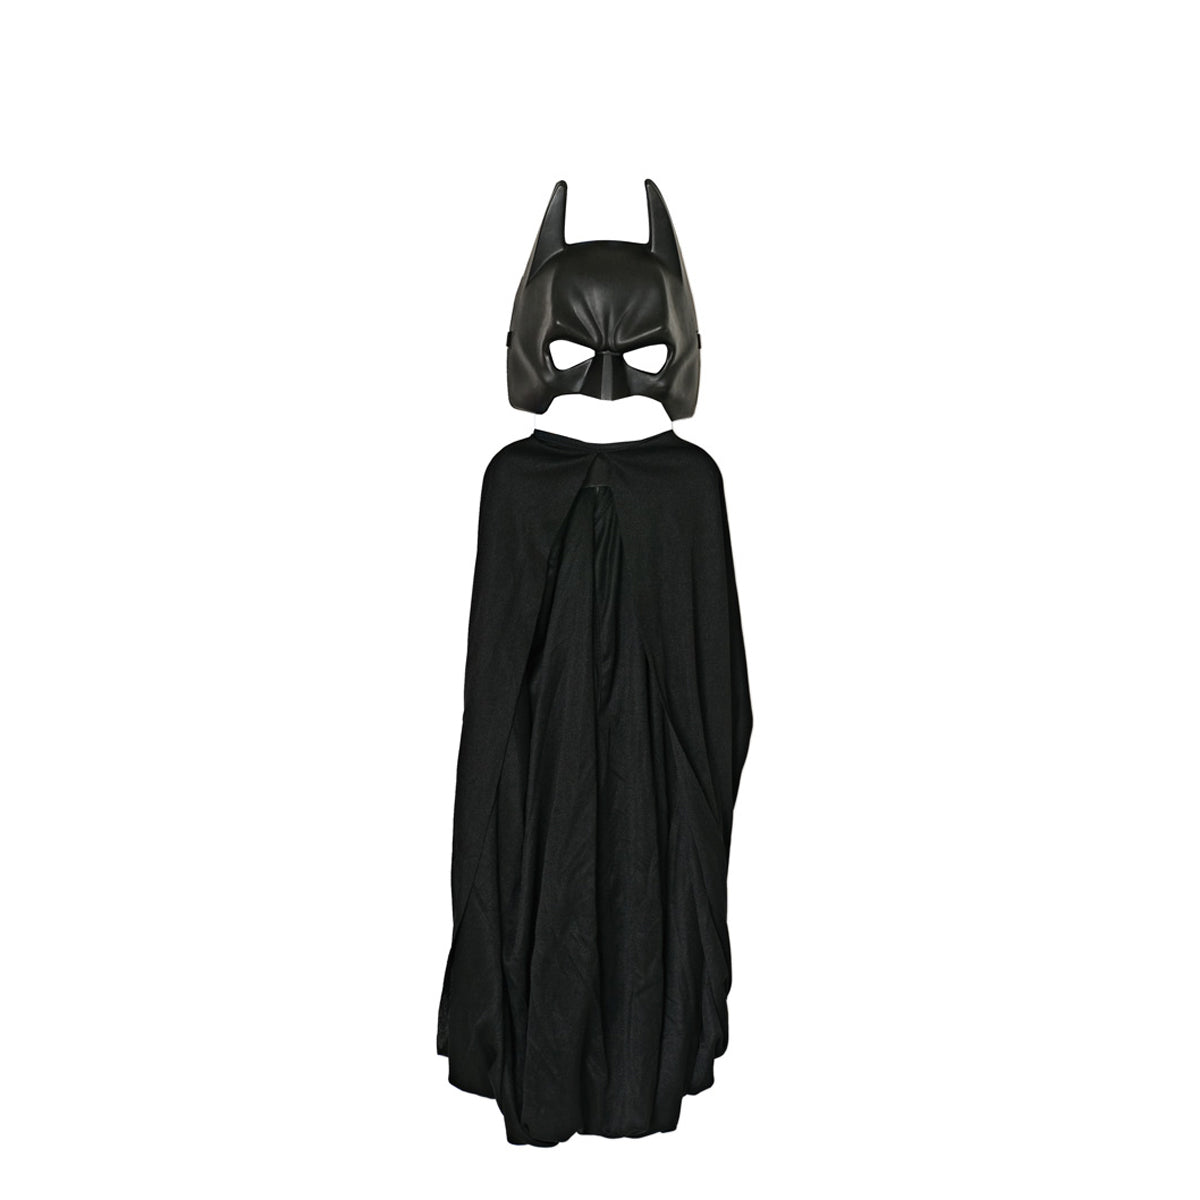 RUBIES II (Ruby Slipper Sales) Costume Accessories Batman Mask and Cape for Kids 082686054829